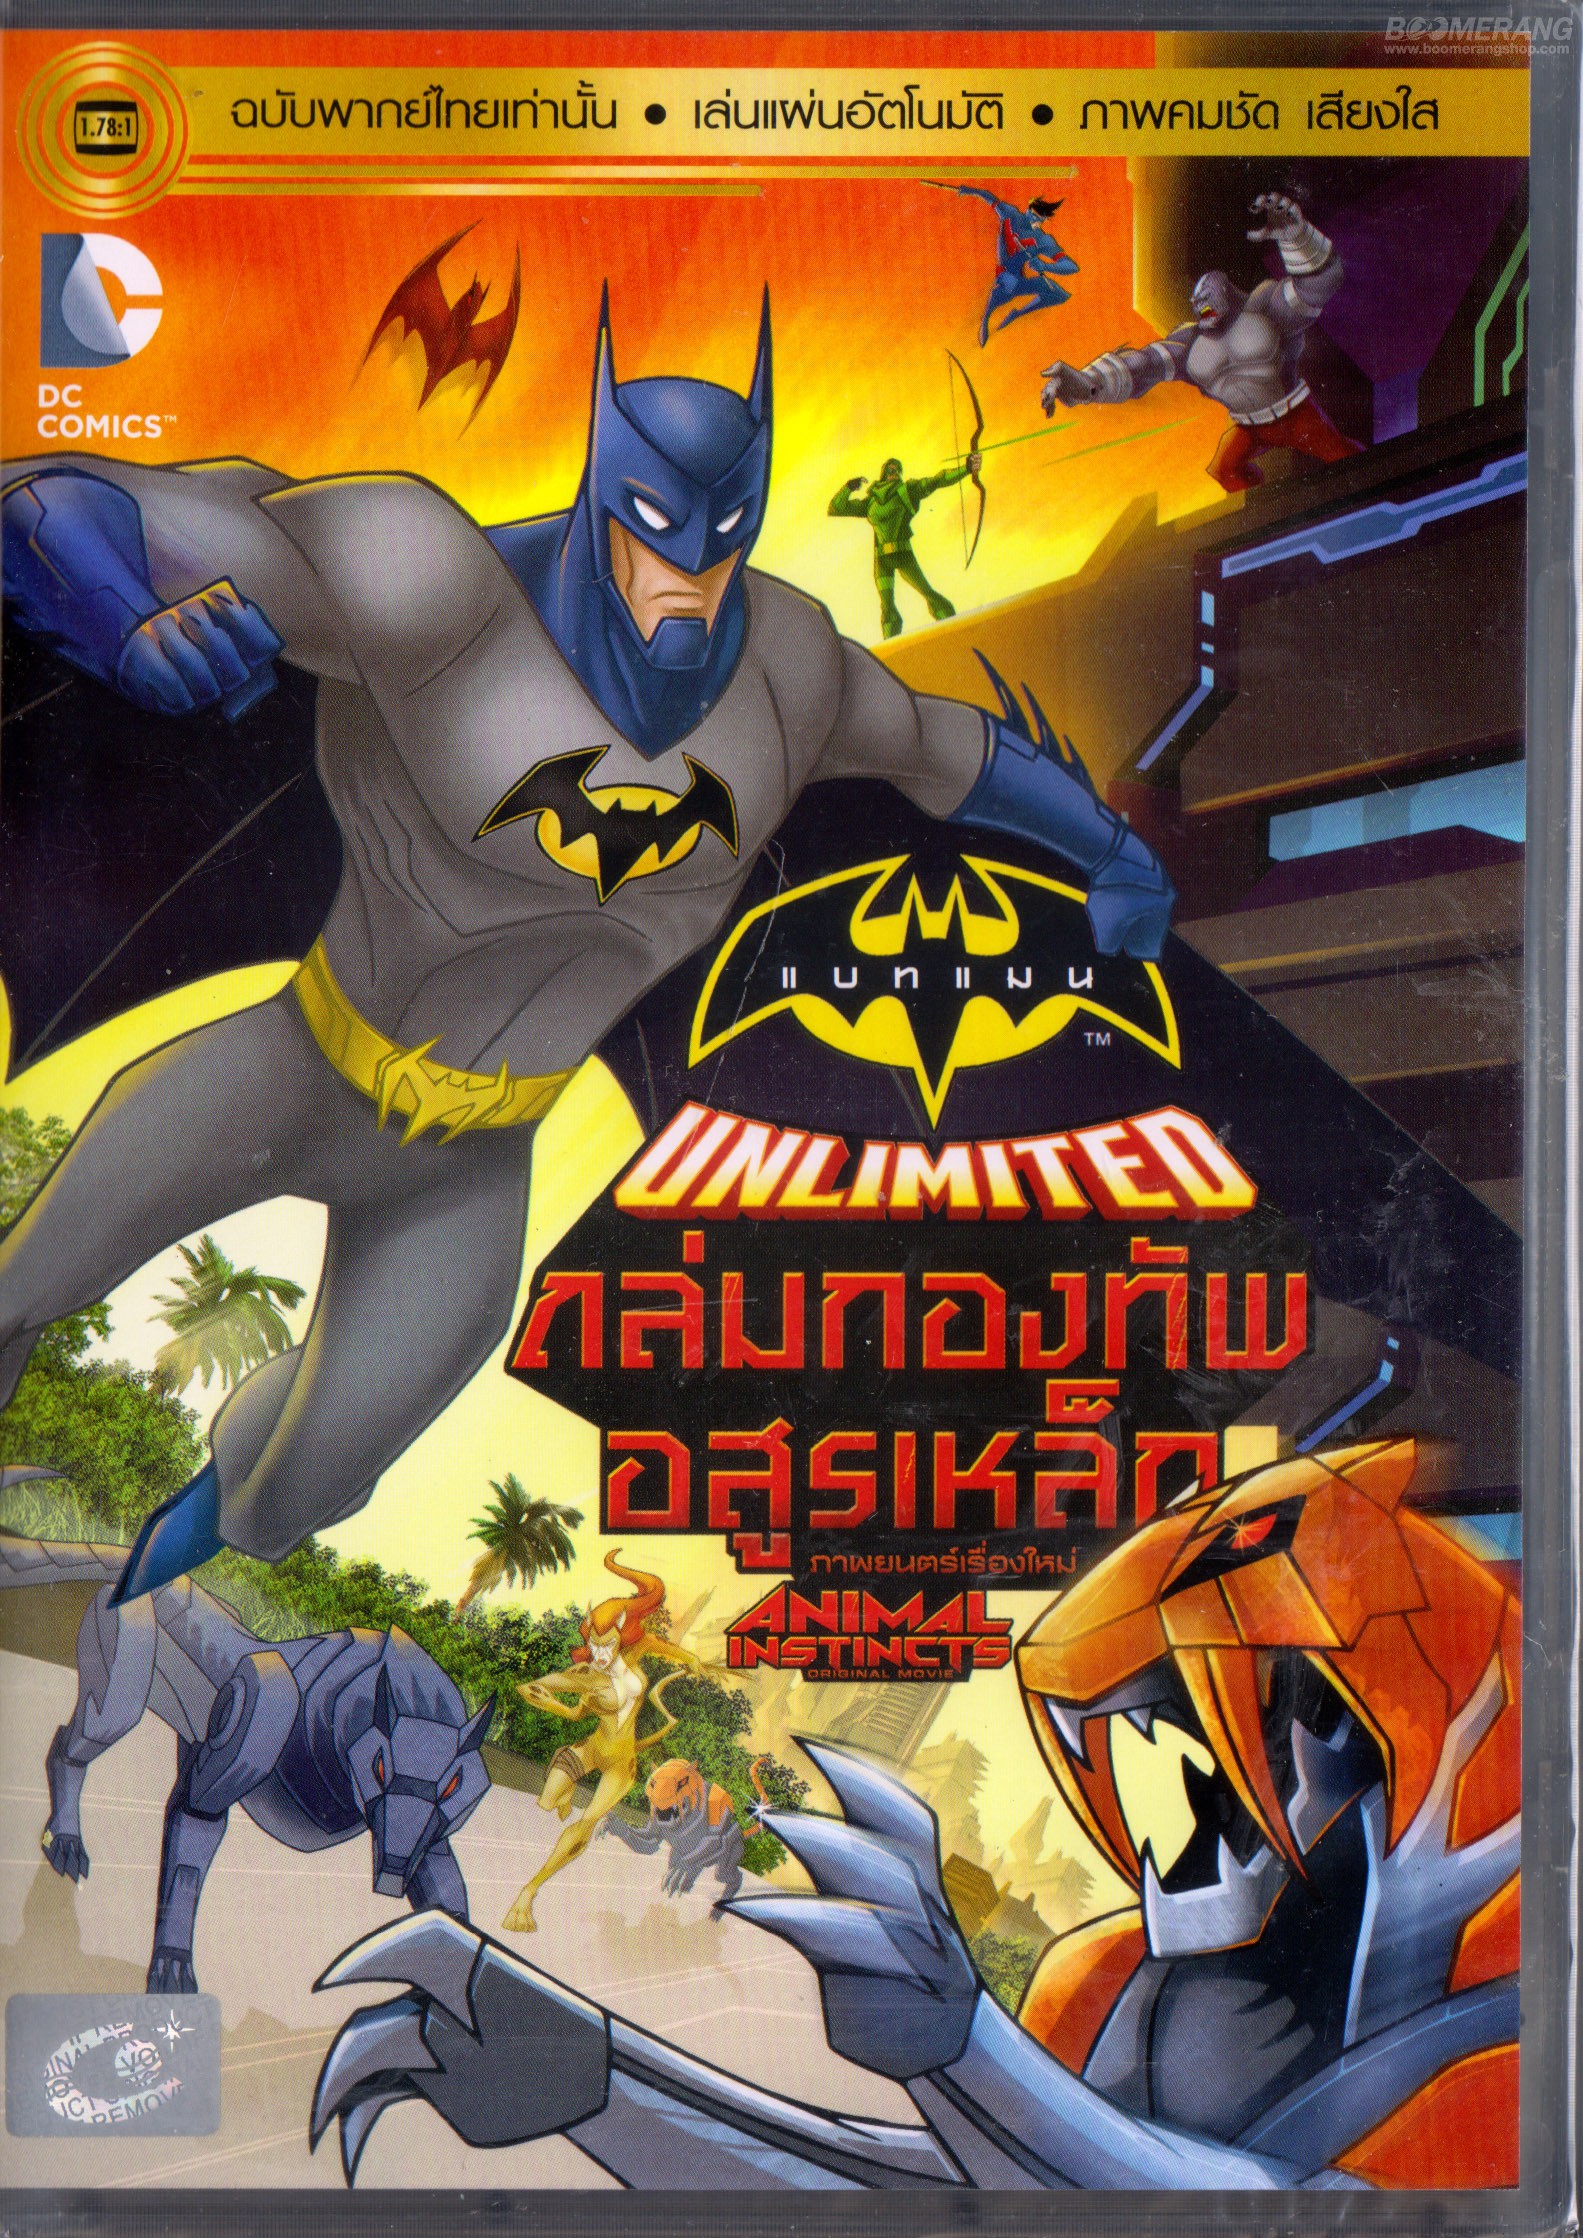 Batman Unlimited: Animal Instincts Backgrounds on Wallpapers Vista